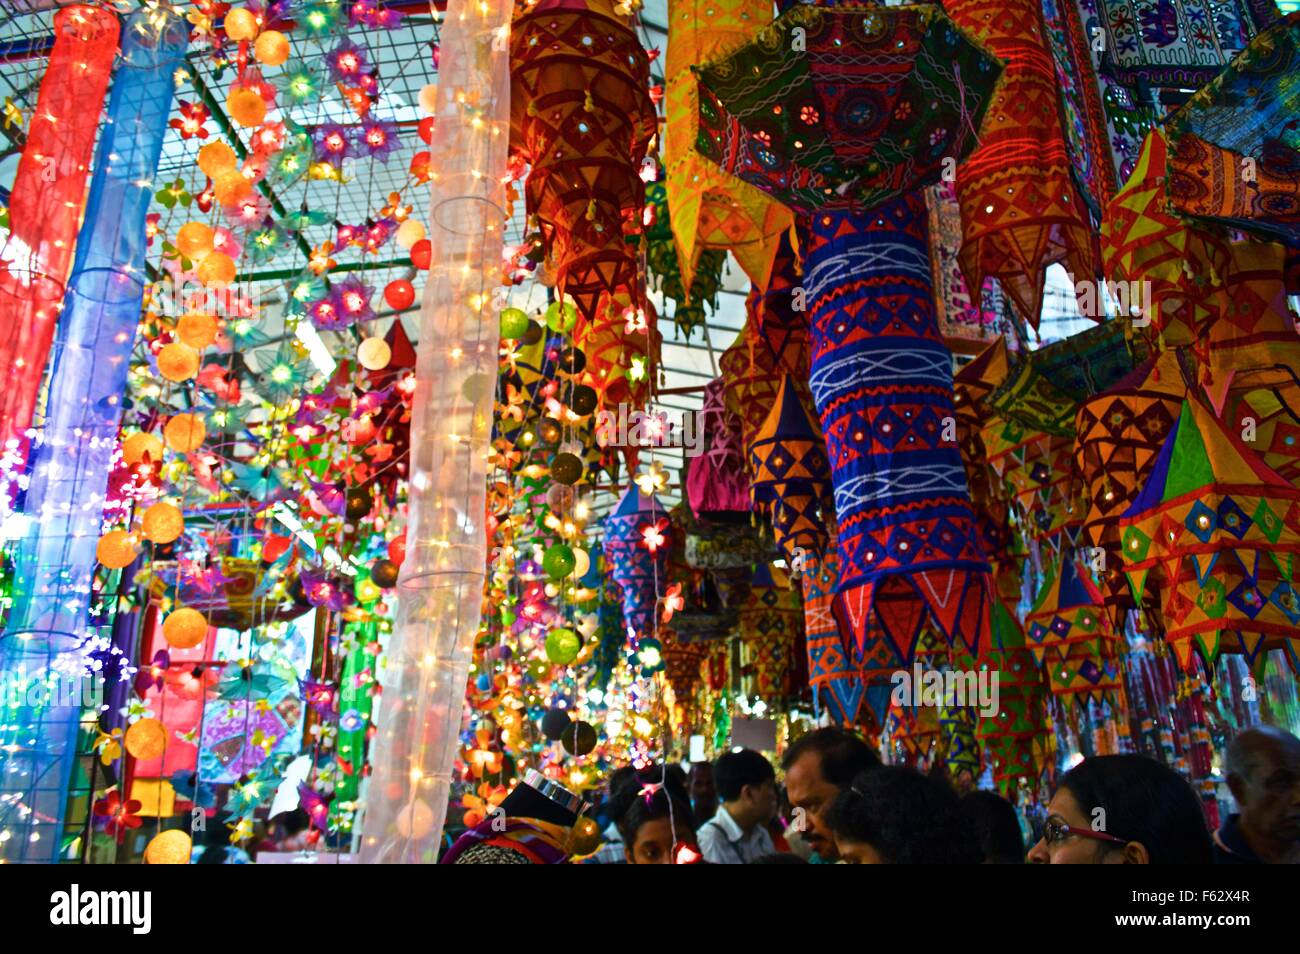 Little india craft market in singapore Stock Photo